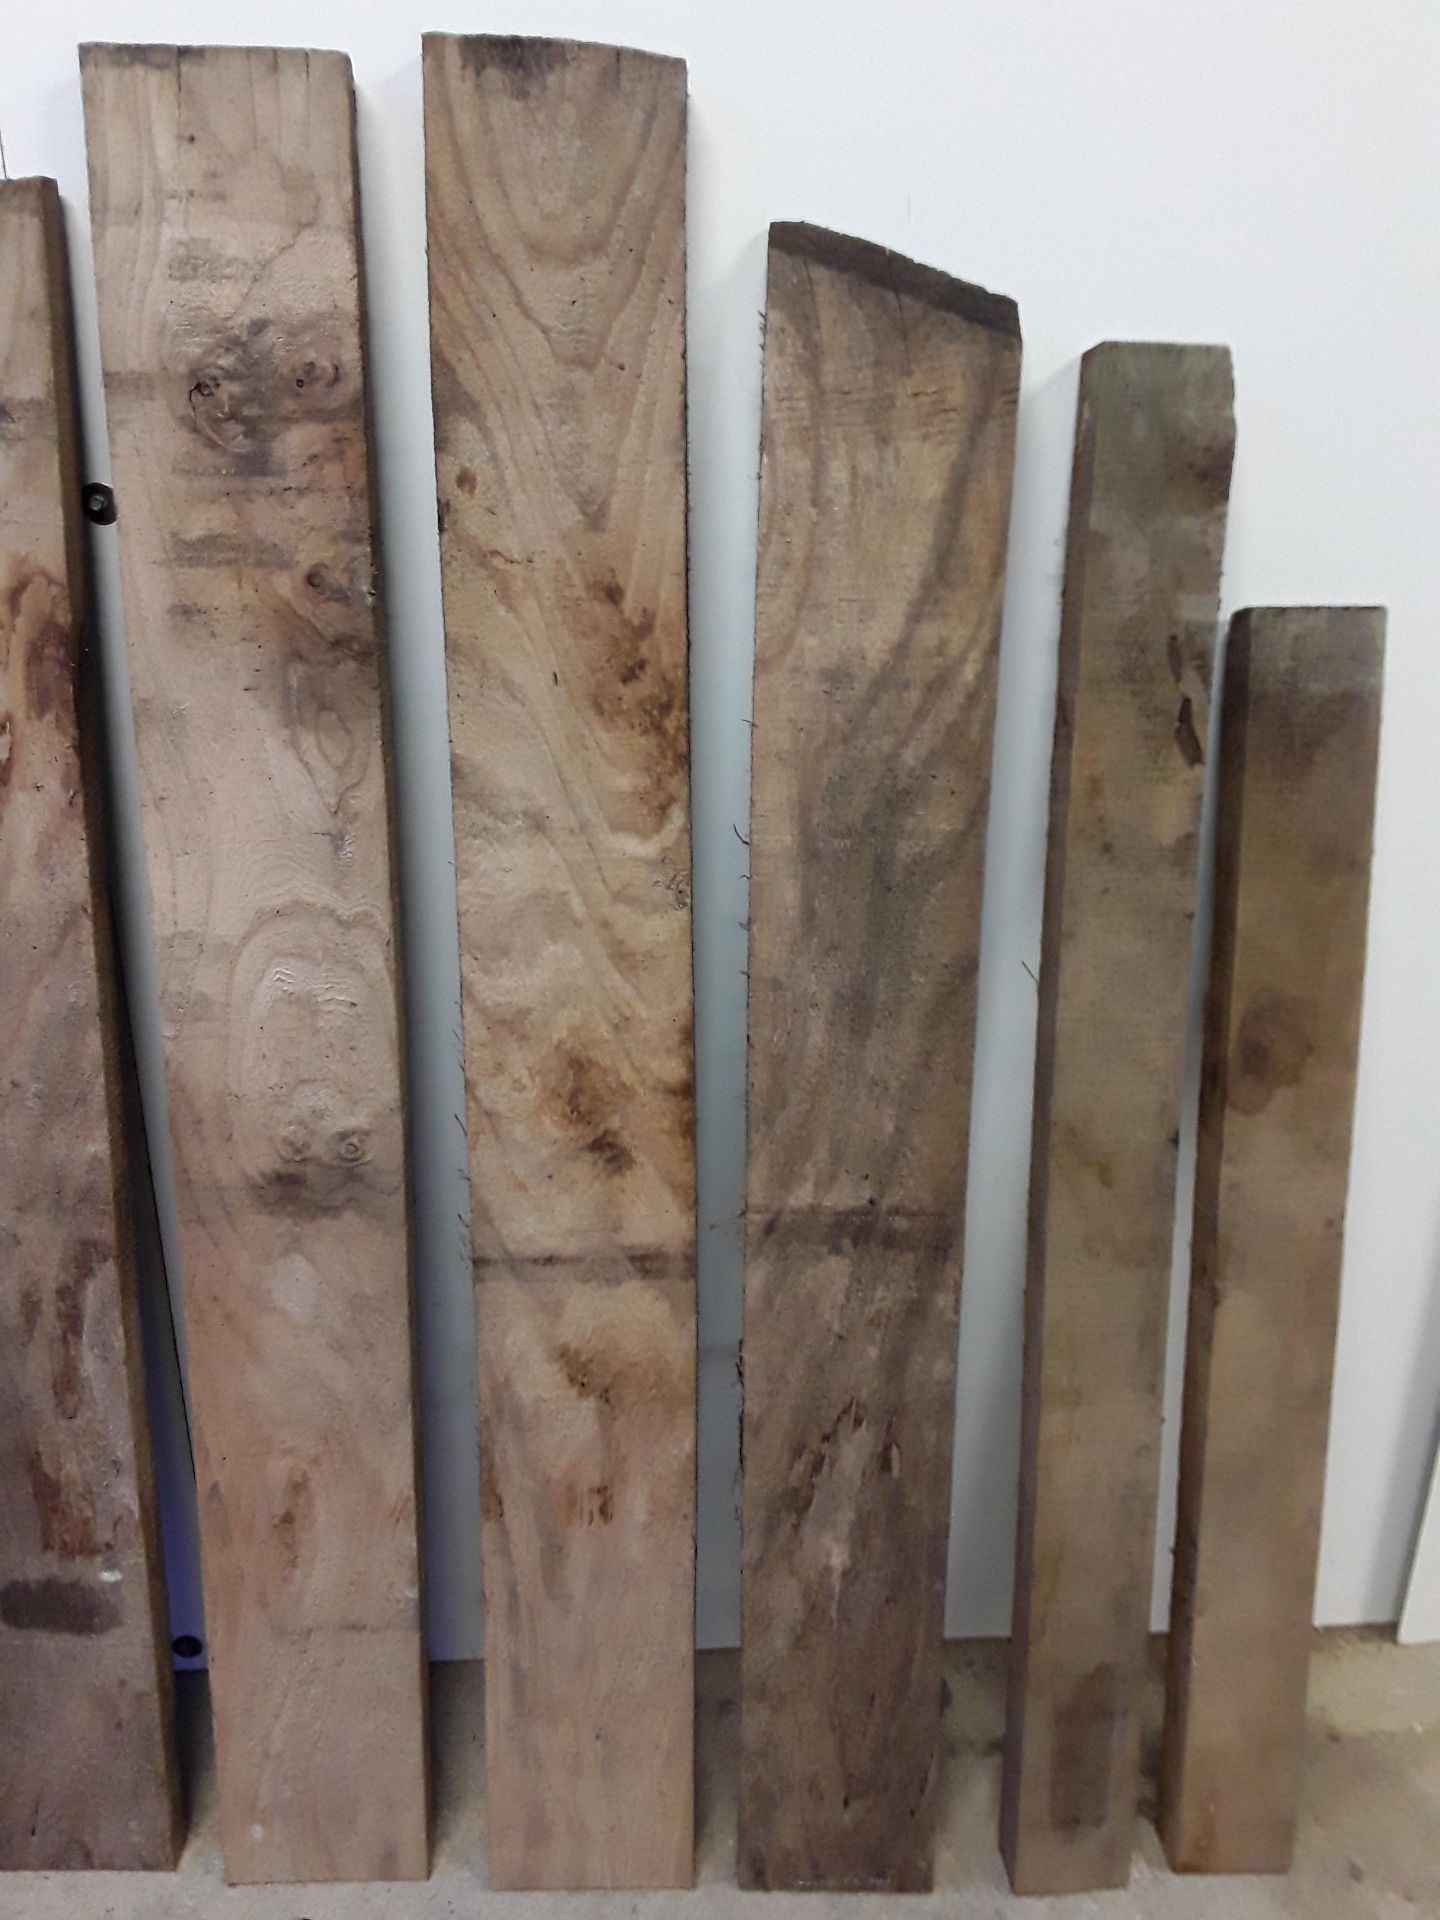 27 x Hardwood Timber Air Dried Sawn English Oak, Chestnut, Cherry, Elm Waney Edge / Square Edge Boar